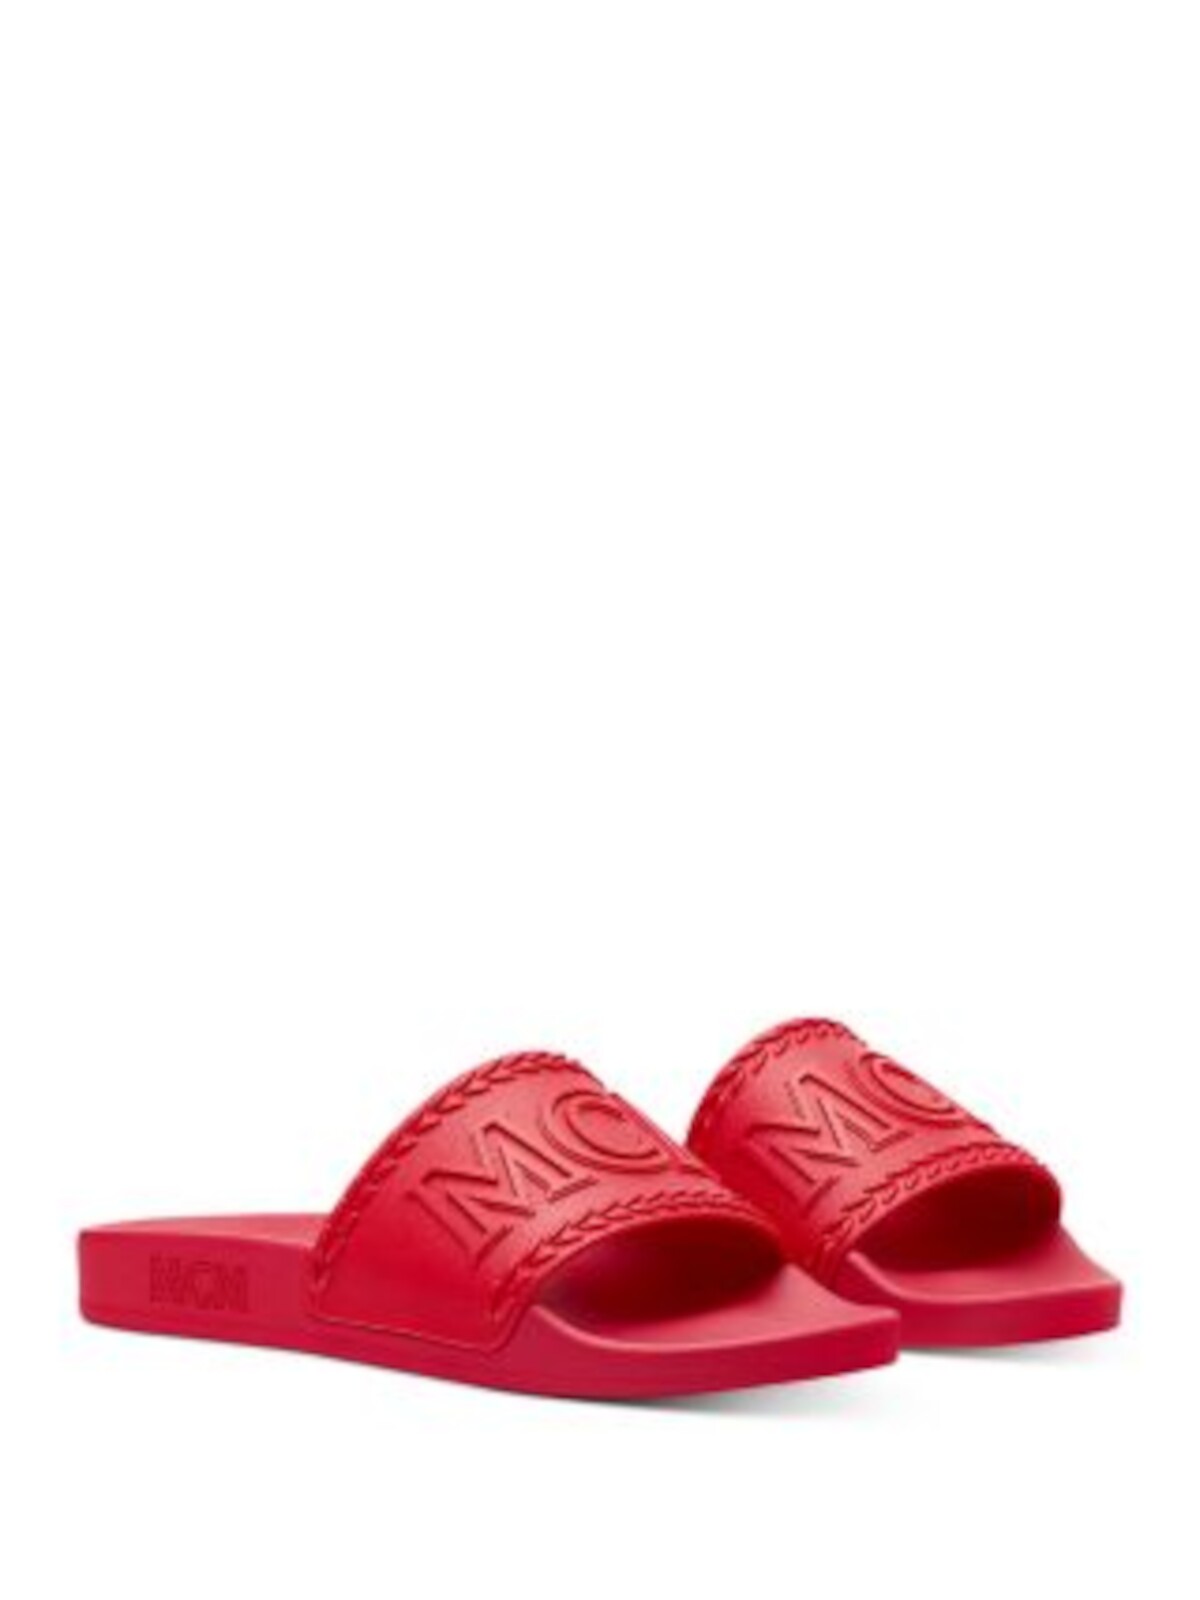 MCM Womens Red Embossed Logo Contoured Footbed Waterproof Round Toe Slip On Slide Sandals Shoes 36